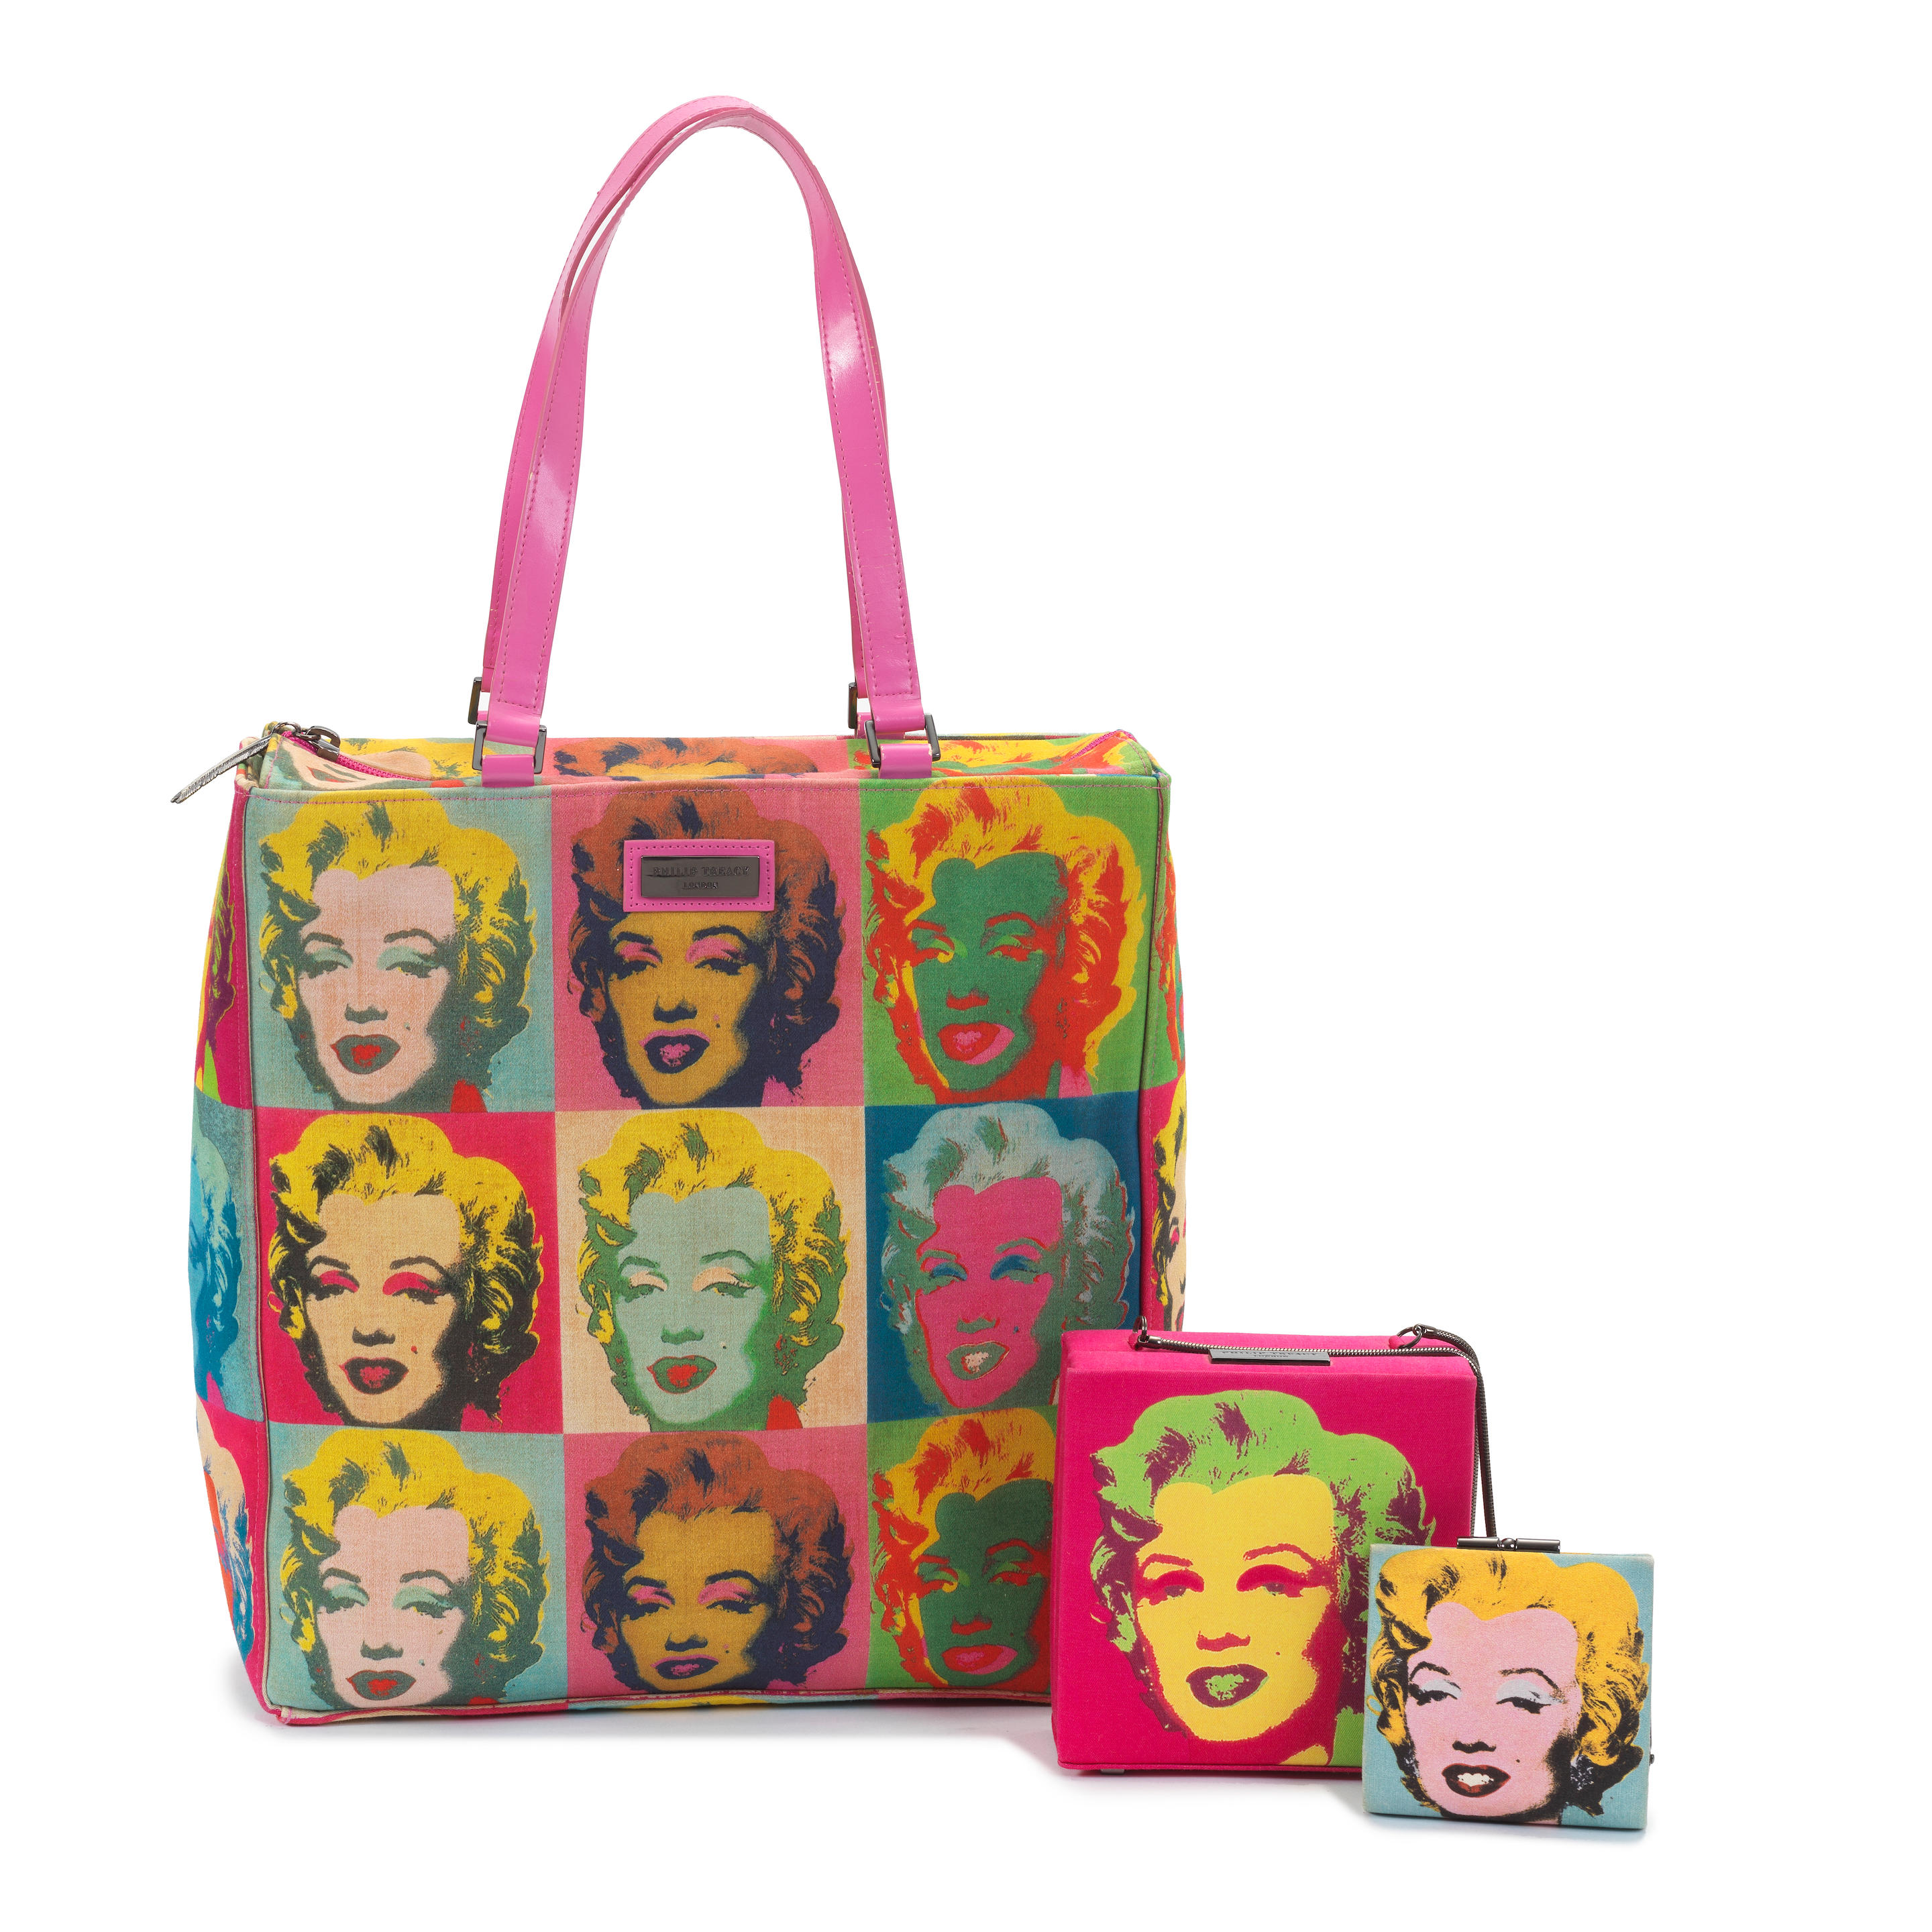 Customized Louis Vuitton Speedy 35 Marilyn Monroe handbag in